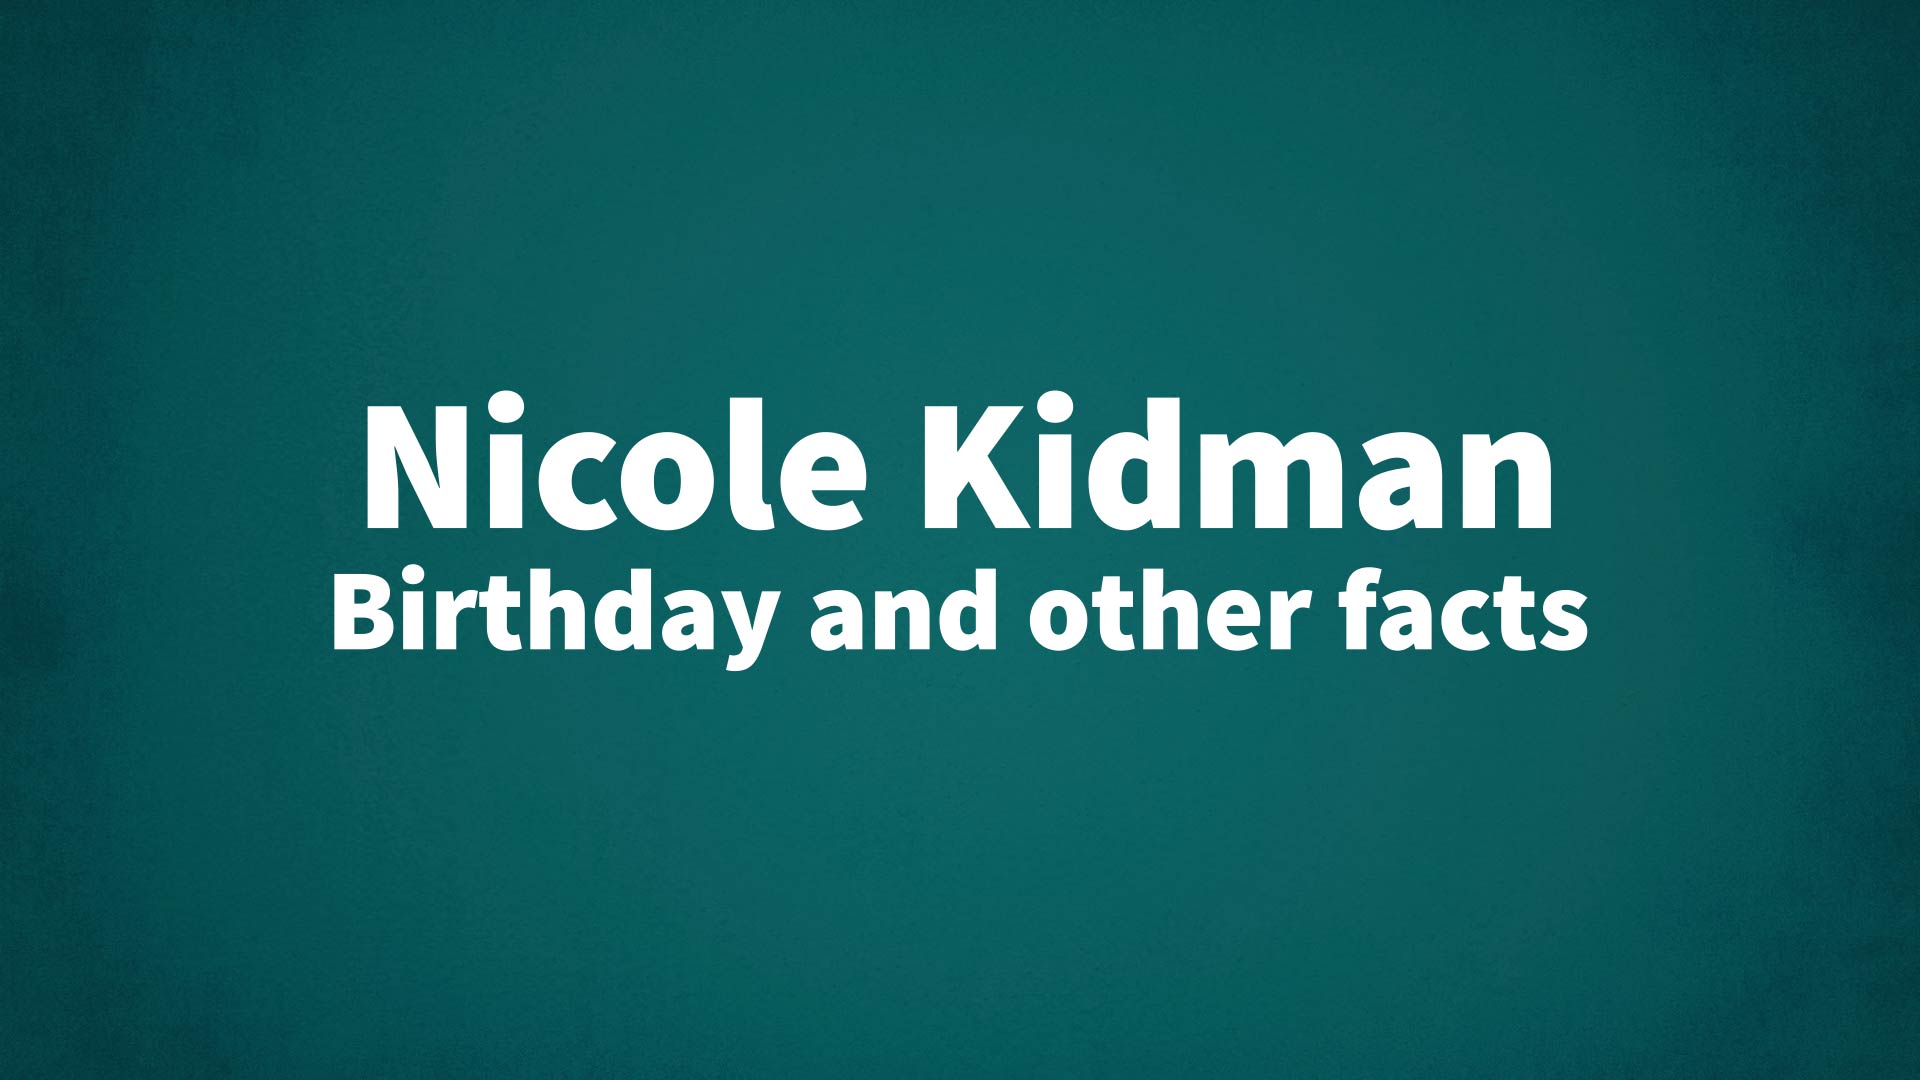 title image for Nicole Kidman birthday